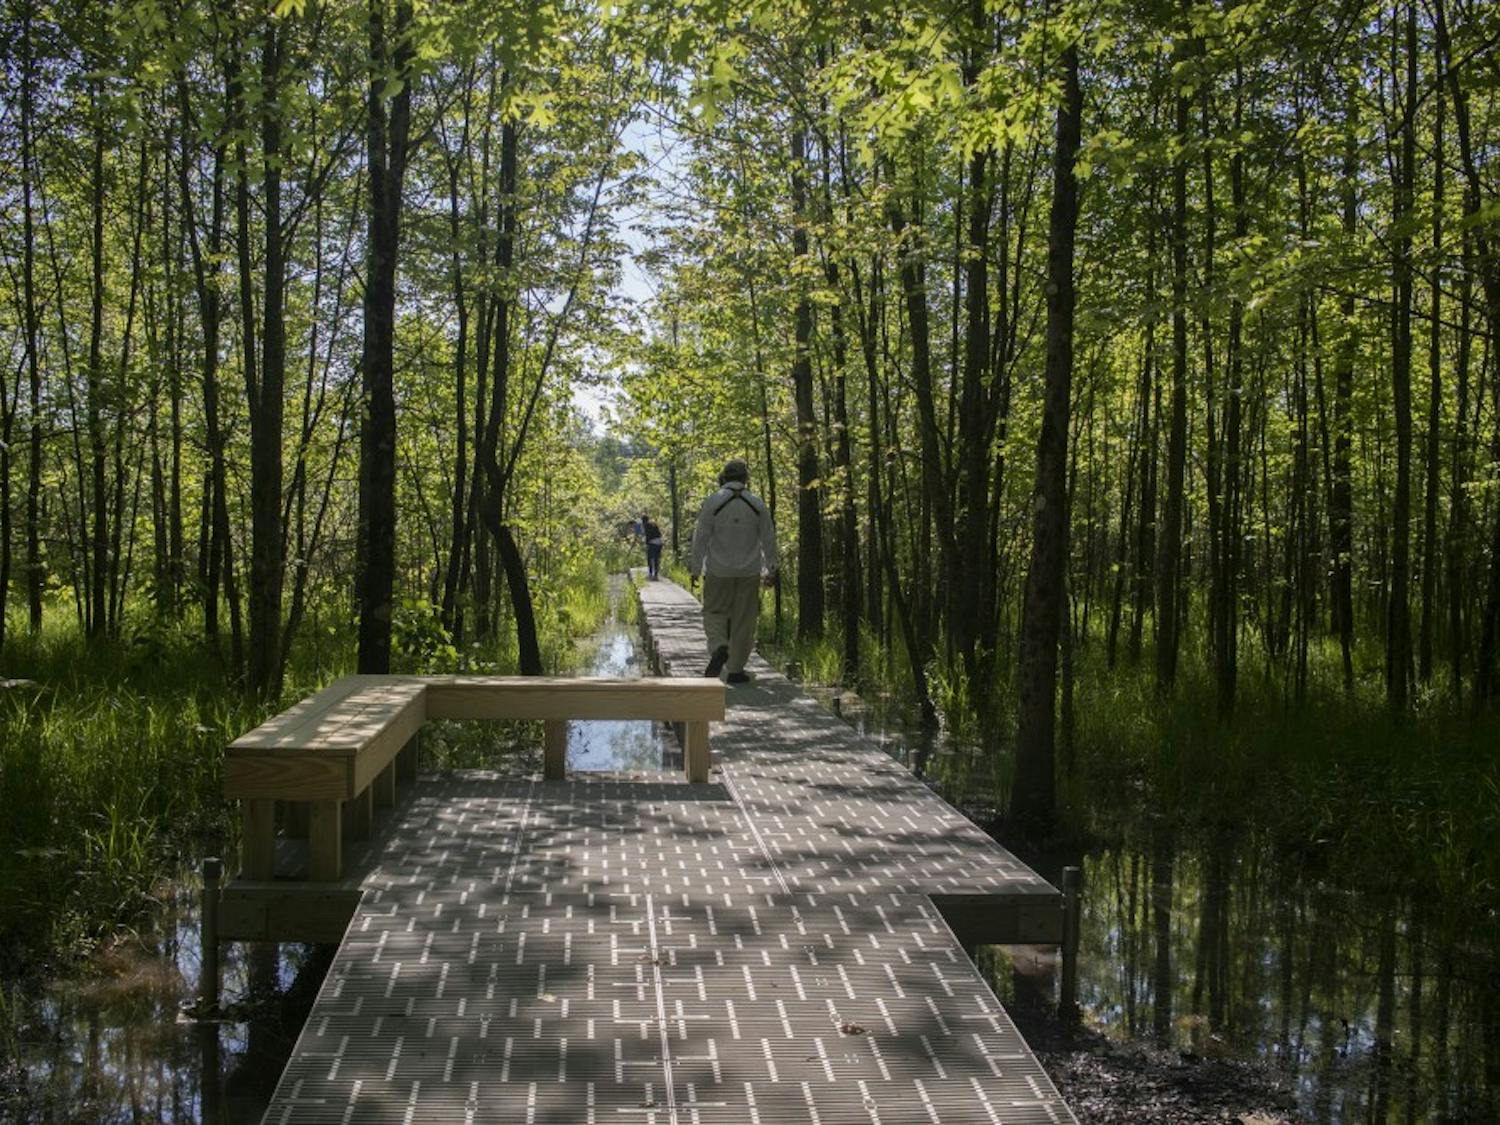 GALLERY: New boardwalk for Beanblossom Bottoms Nature Preserve